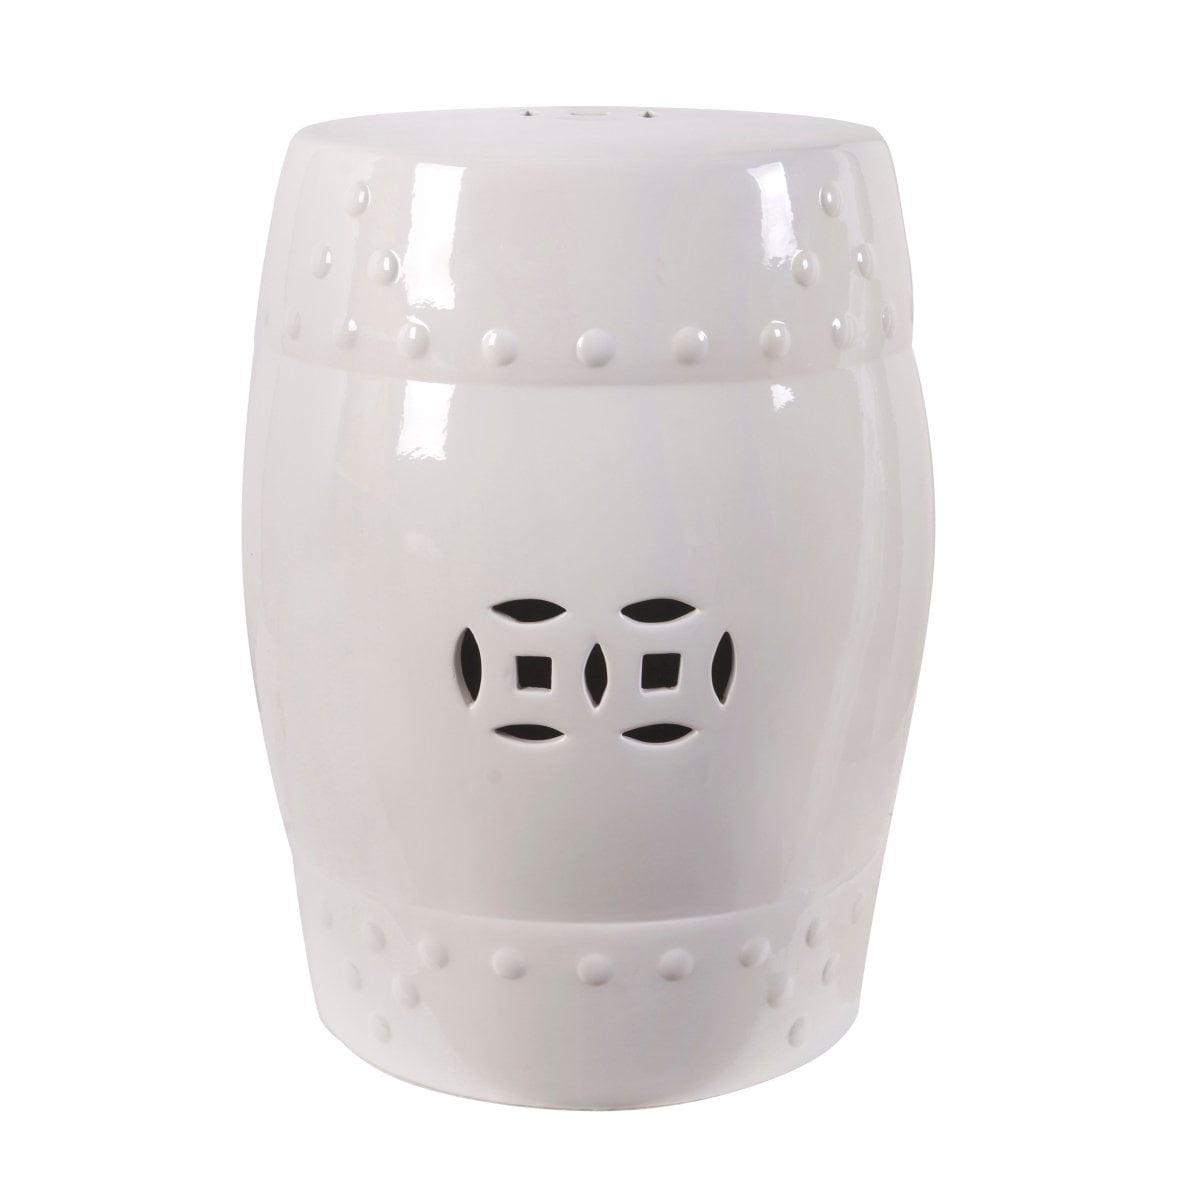 Zella Garden Ceramic Stool - White AB-68136 picket and rail